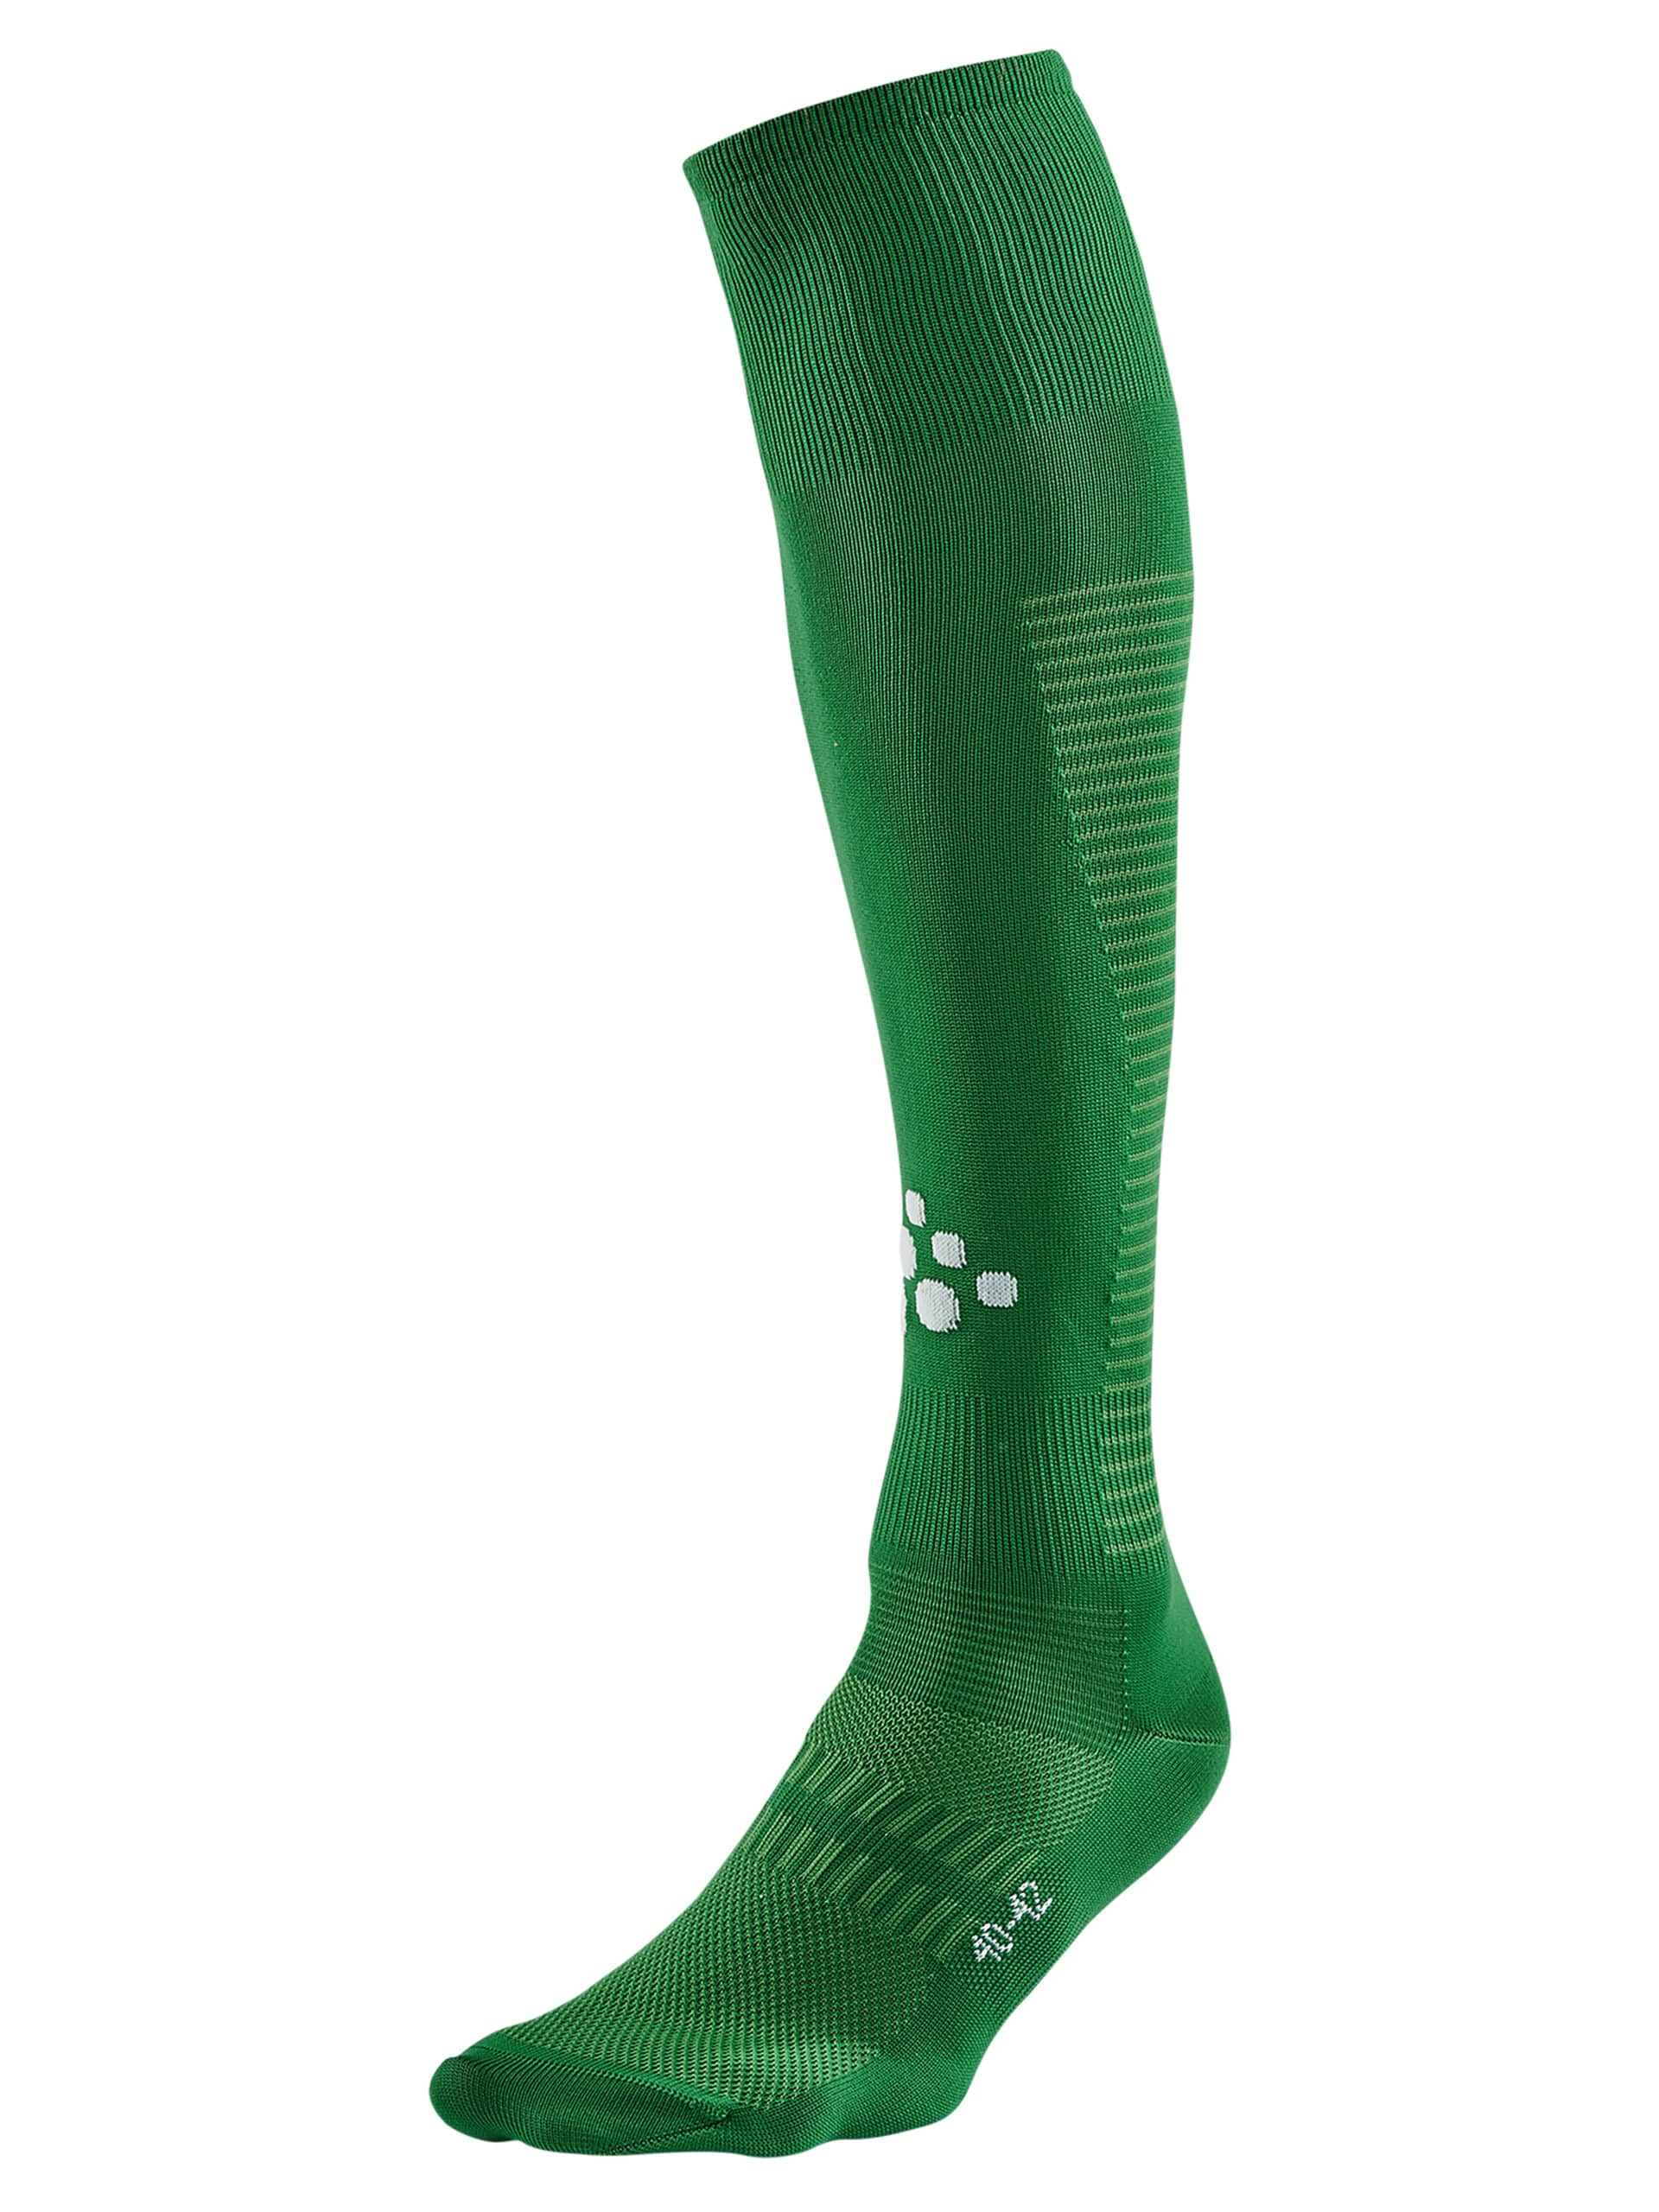 Craft - Pro Control Socks - Team Green 43/45